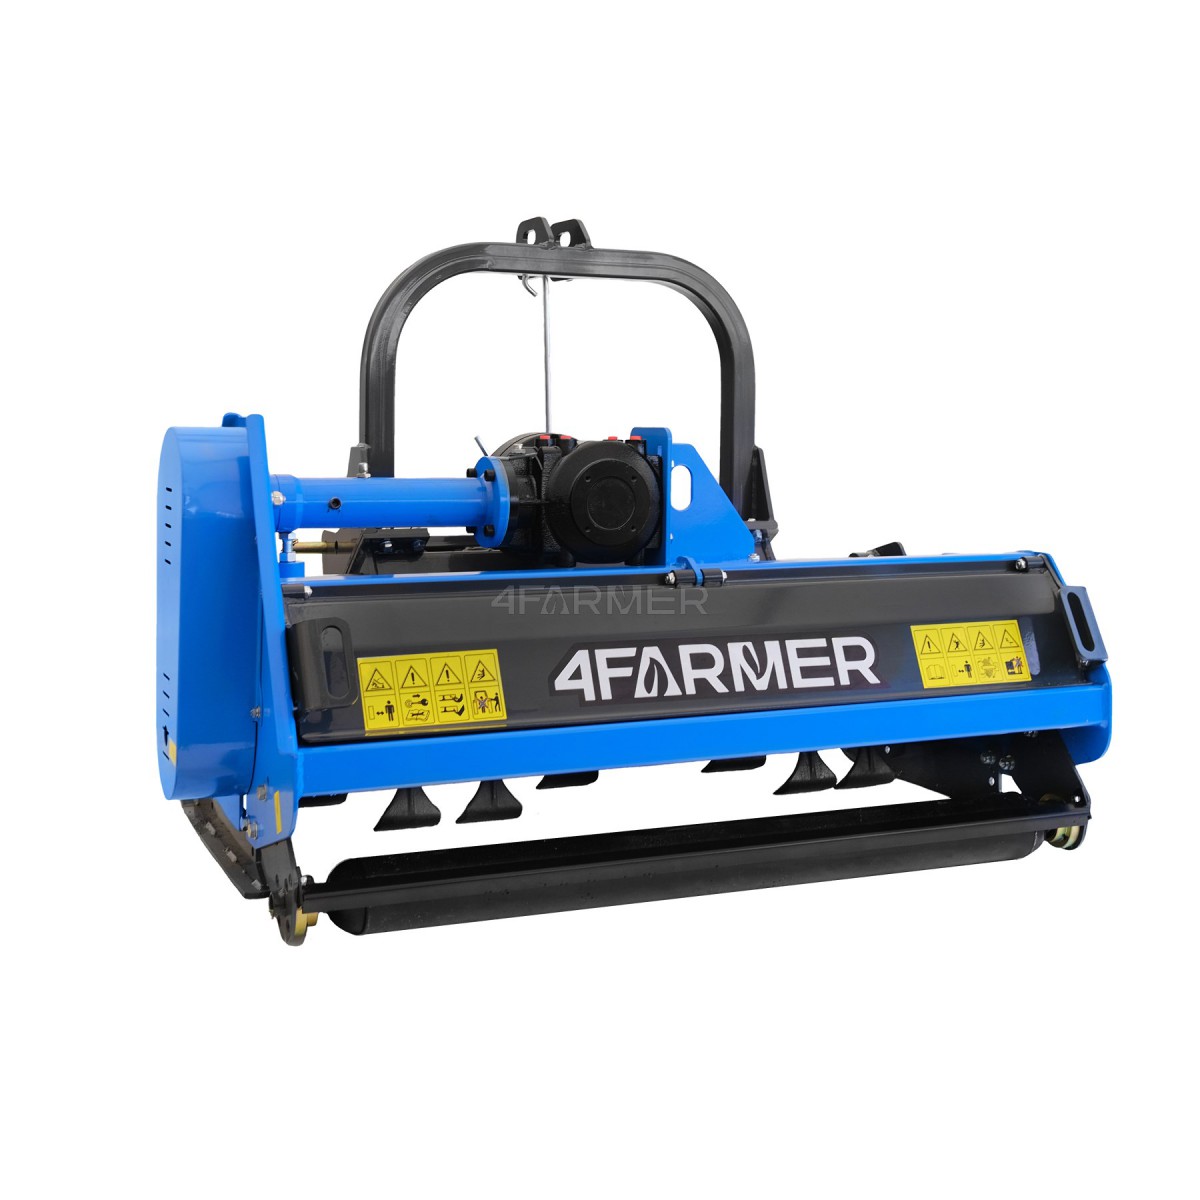 EFGCH 145D 4FARMER flail mower - blue